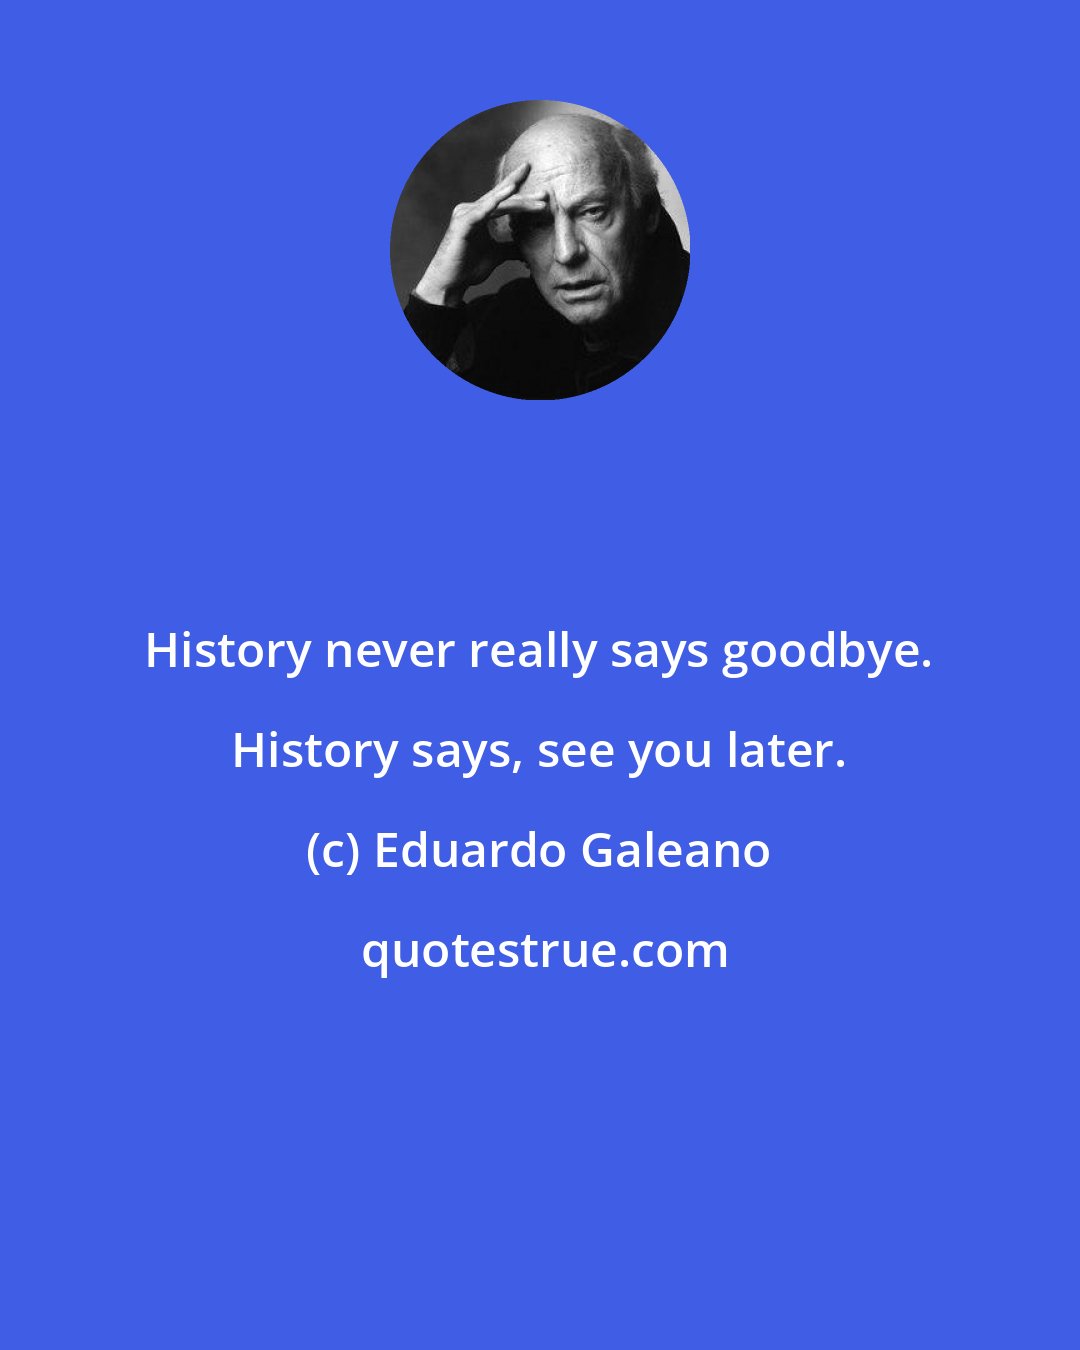 Eduardo Galeano: History never really says goodbye. History says, see you later.